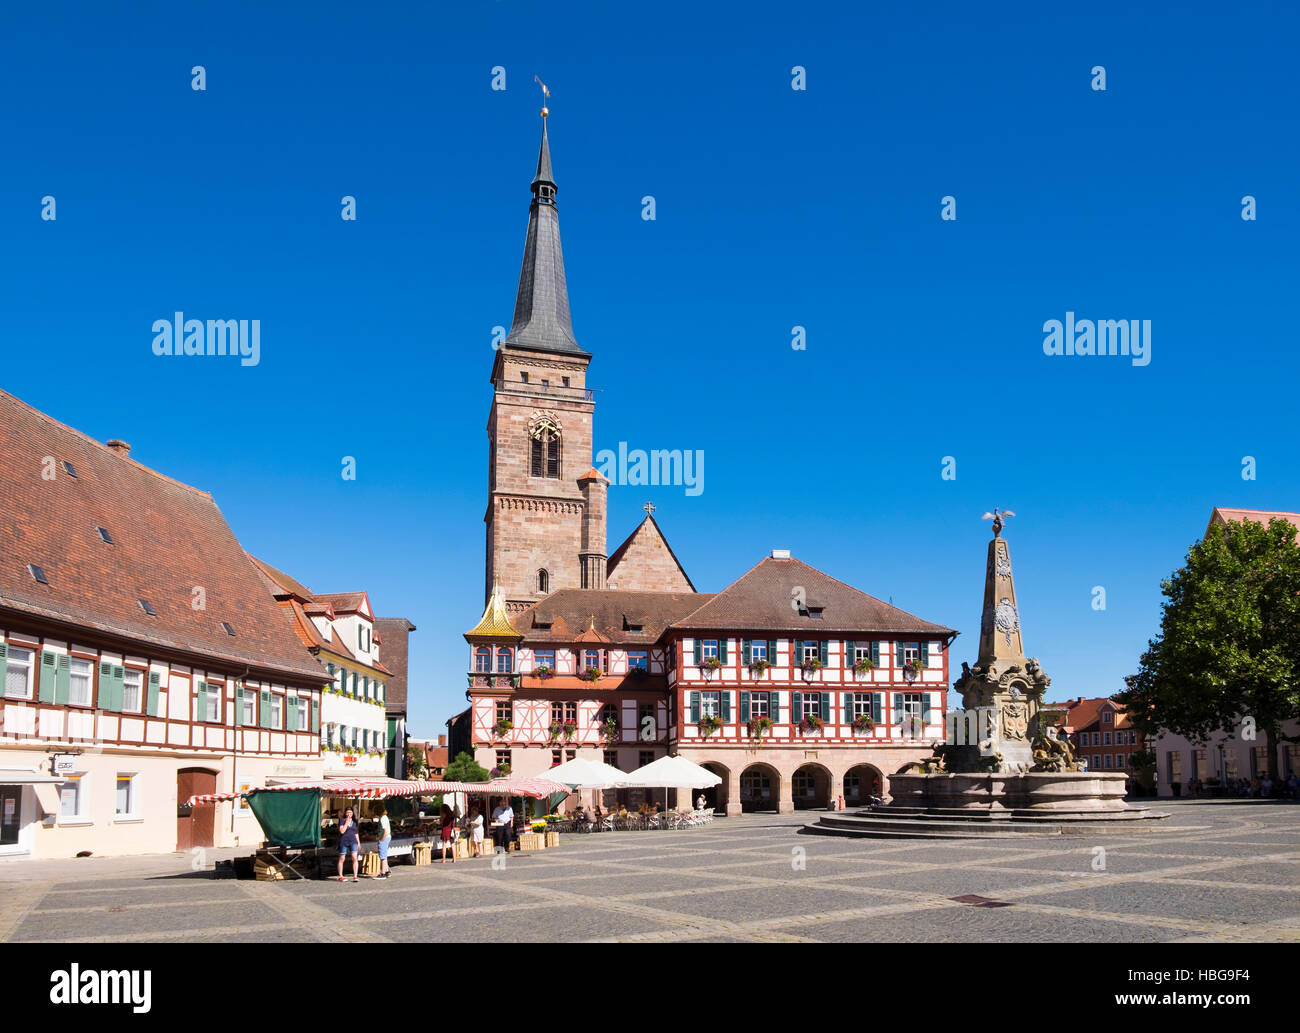 Schöner Brunnen, fontana, Municipio e Chiesa, Königsplatz, Schwabach, Media Franconia, Franconia, Baviera, Germania Foto Stock